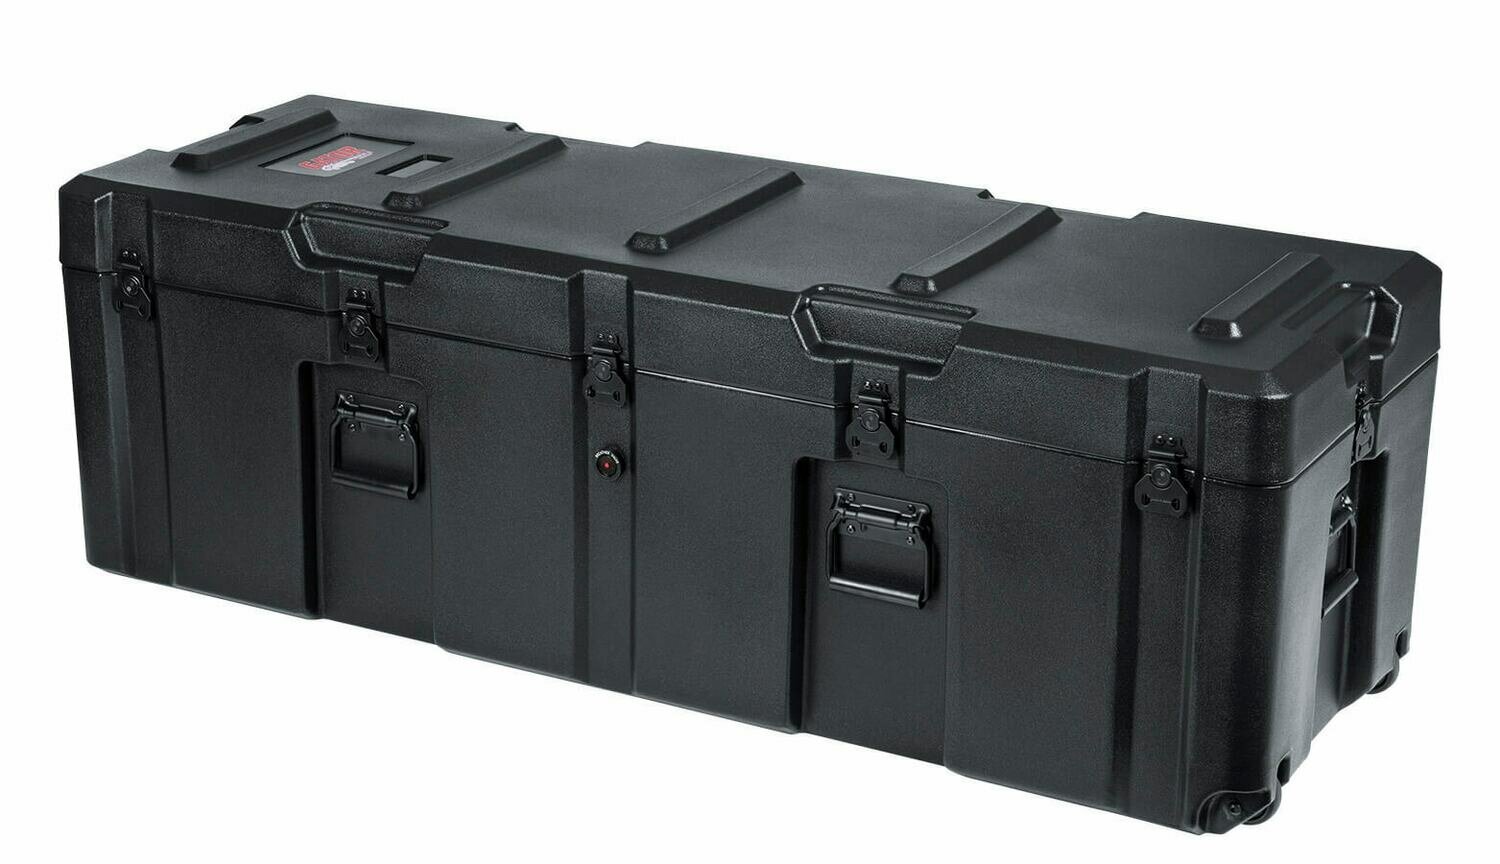 Gator Cases ATA Roto-Molded Utility Case 55 x 17 x 15" Interior
#GAGXR5517153 MFR #GXR-5517-1503